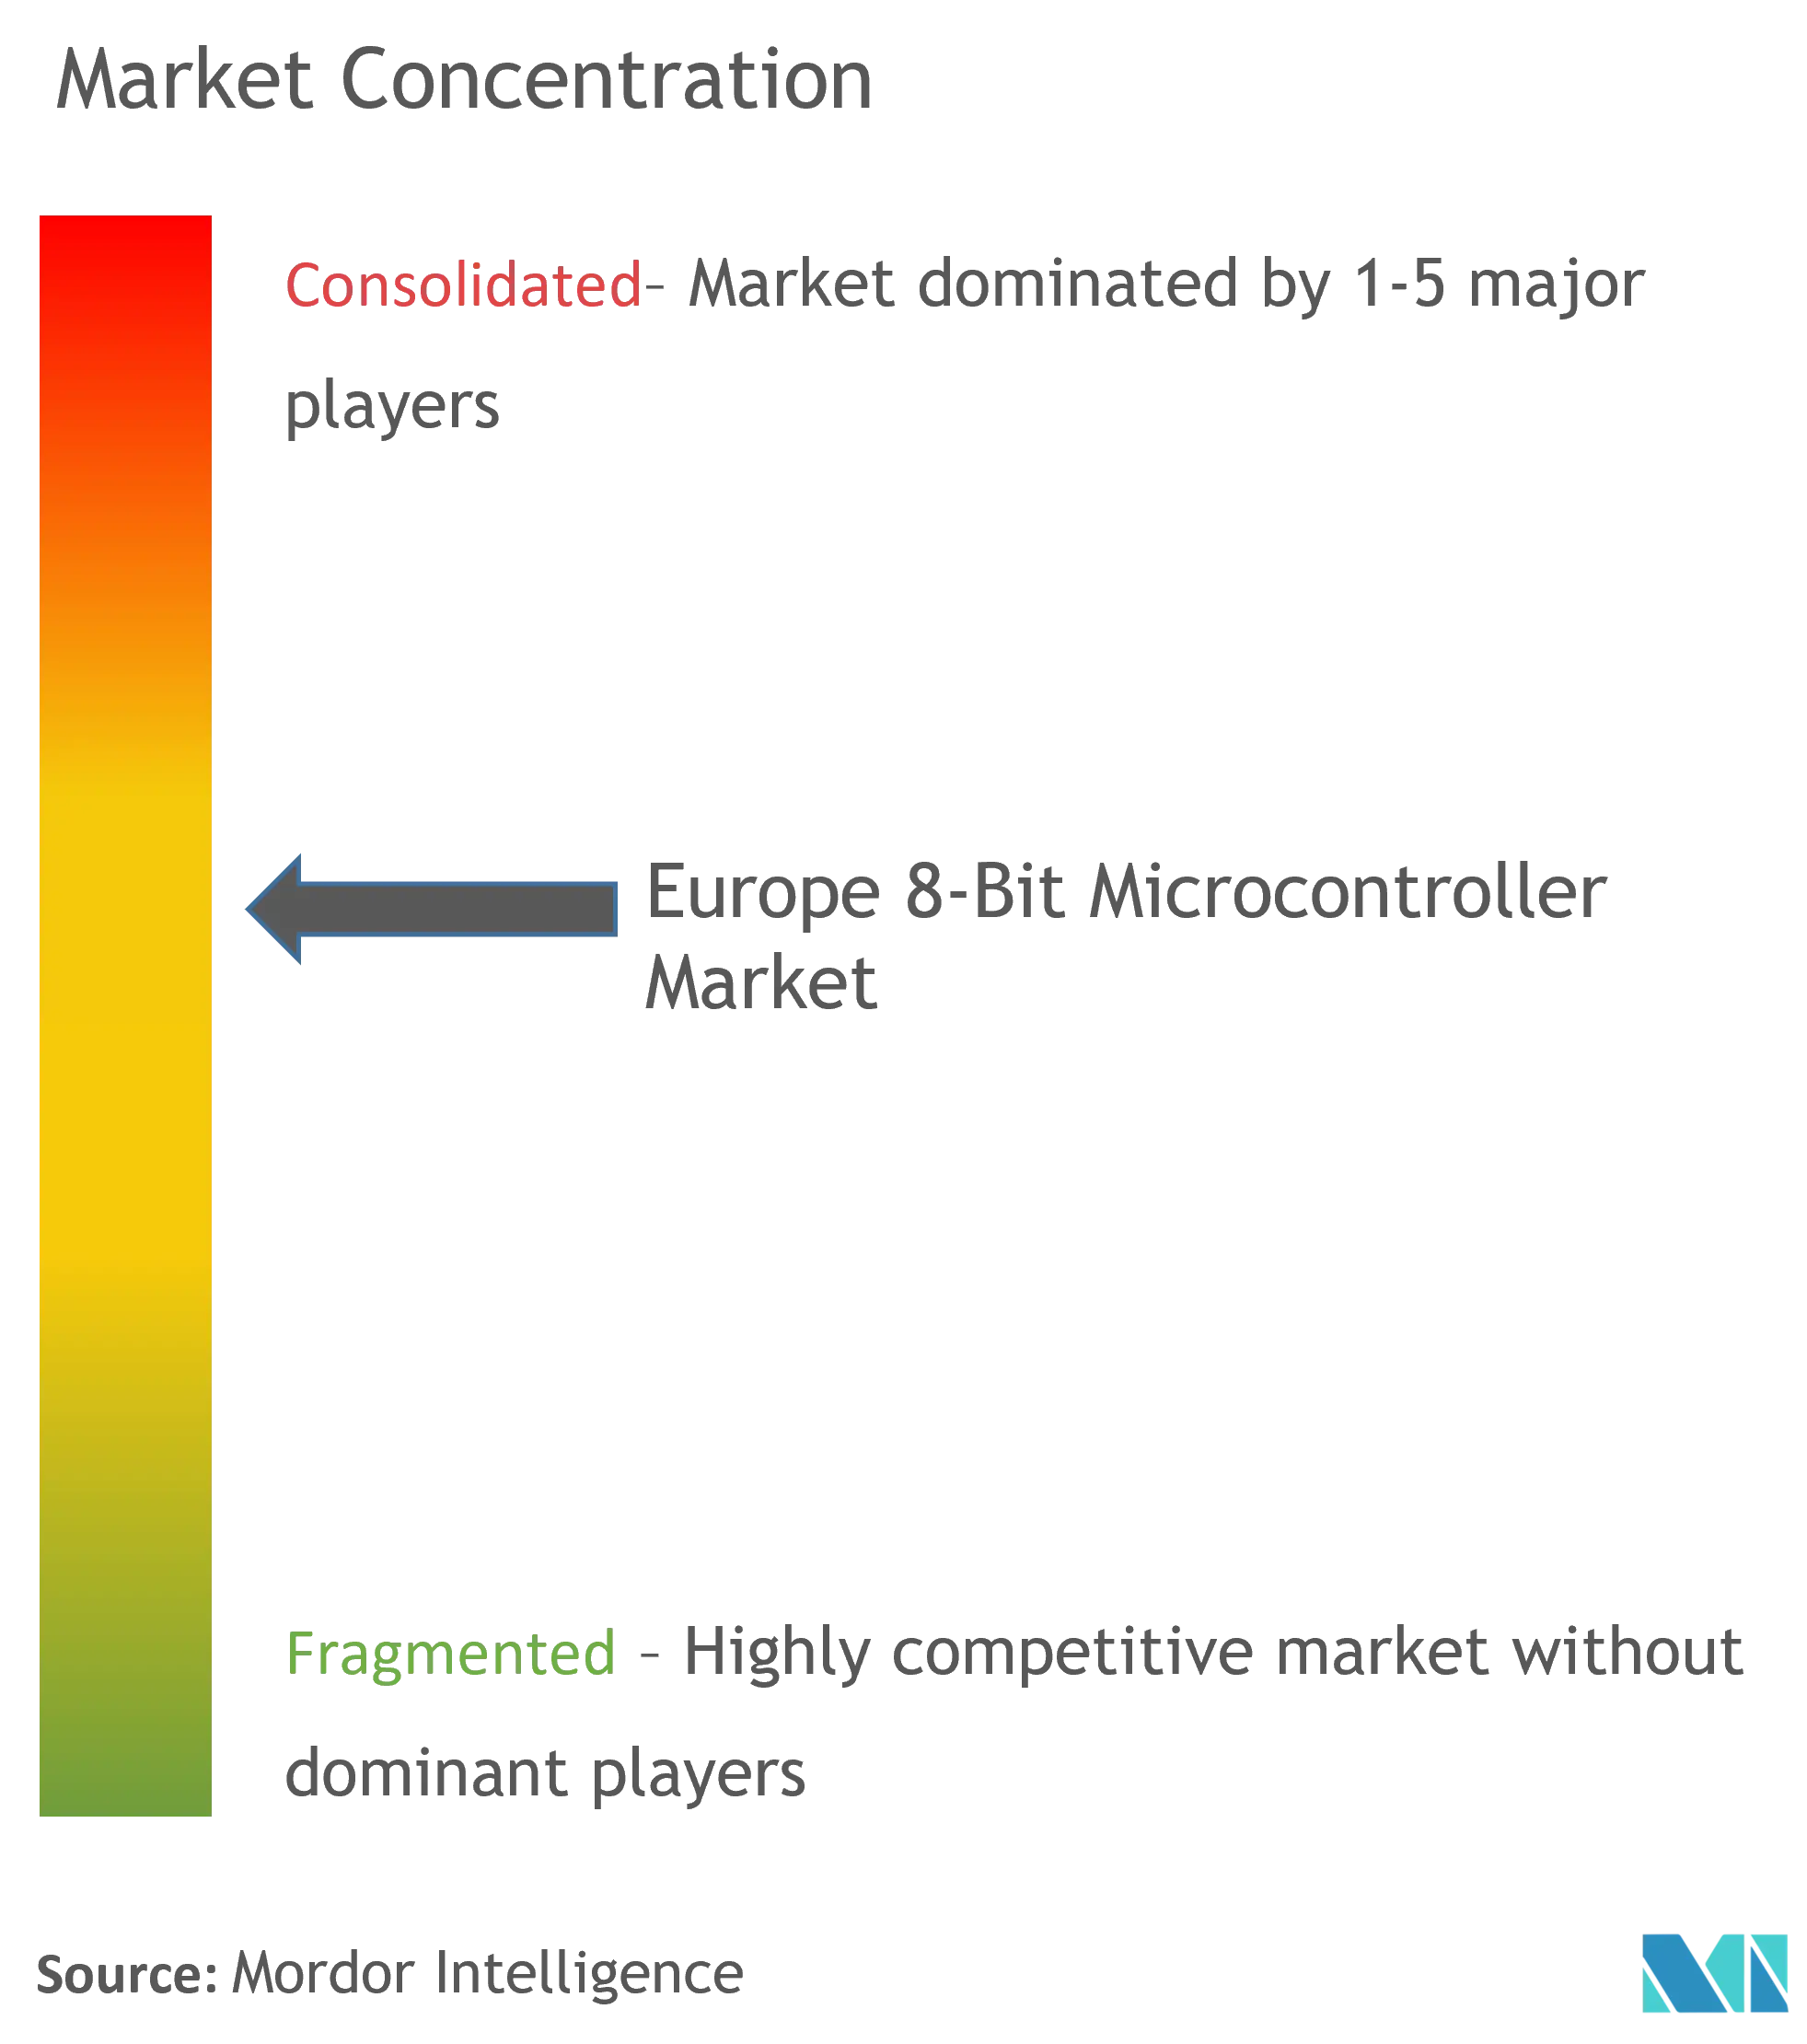 Europe 8-Bit Microcontroller Market